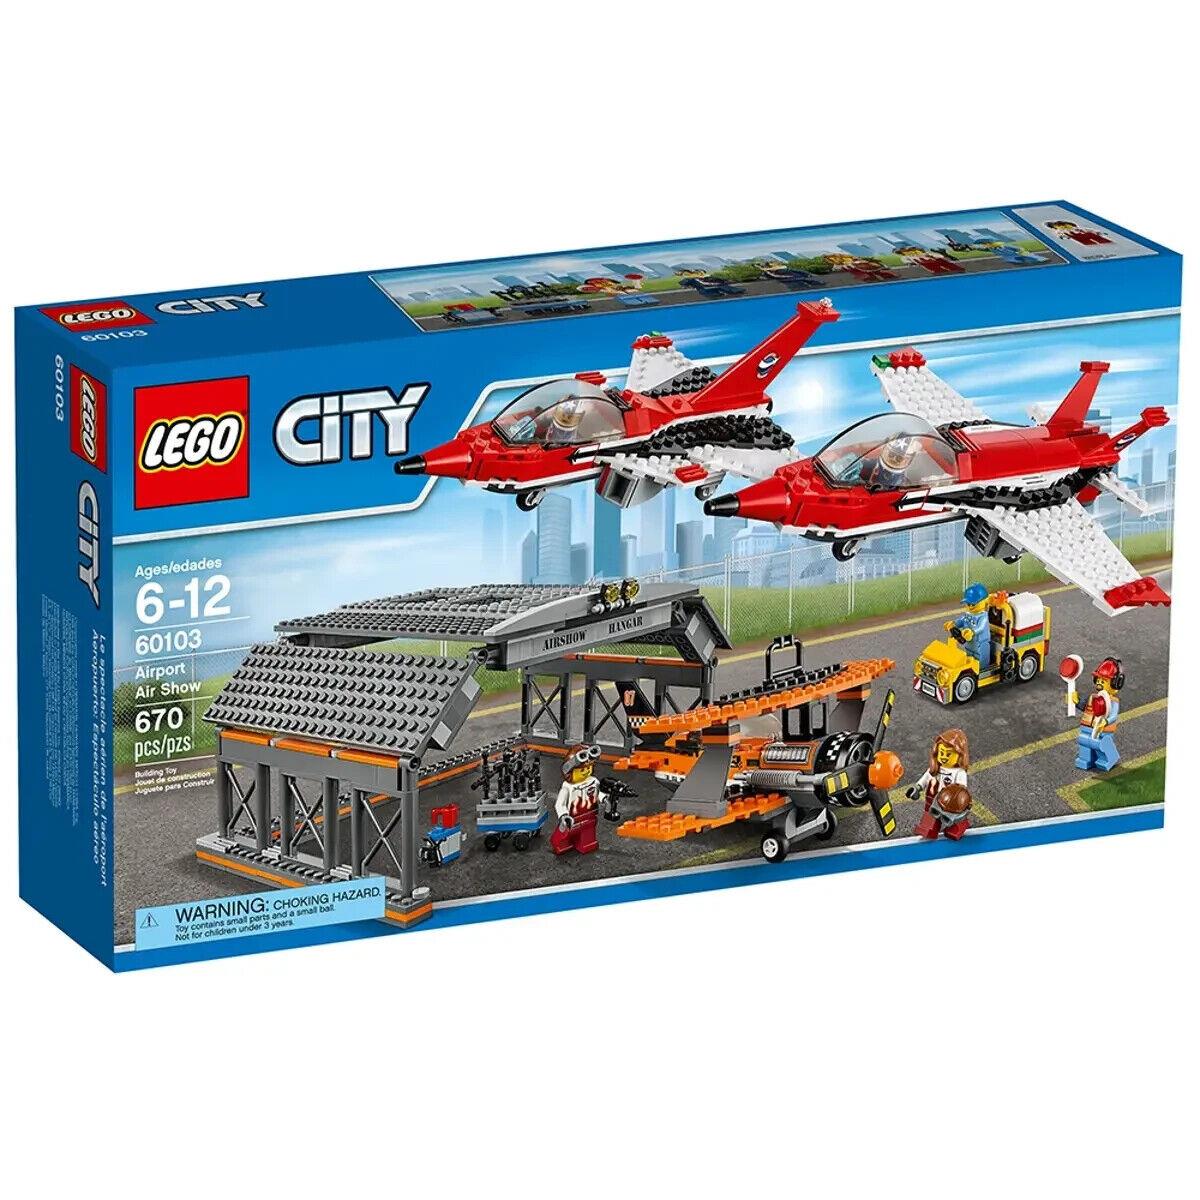 Lego 60103 City Airport Air Show 670 Pieces